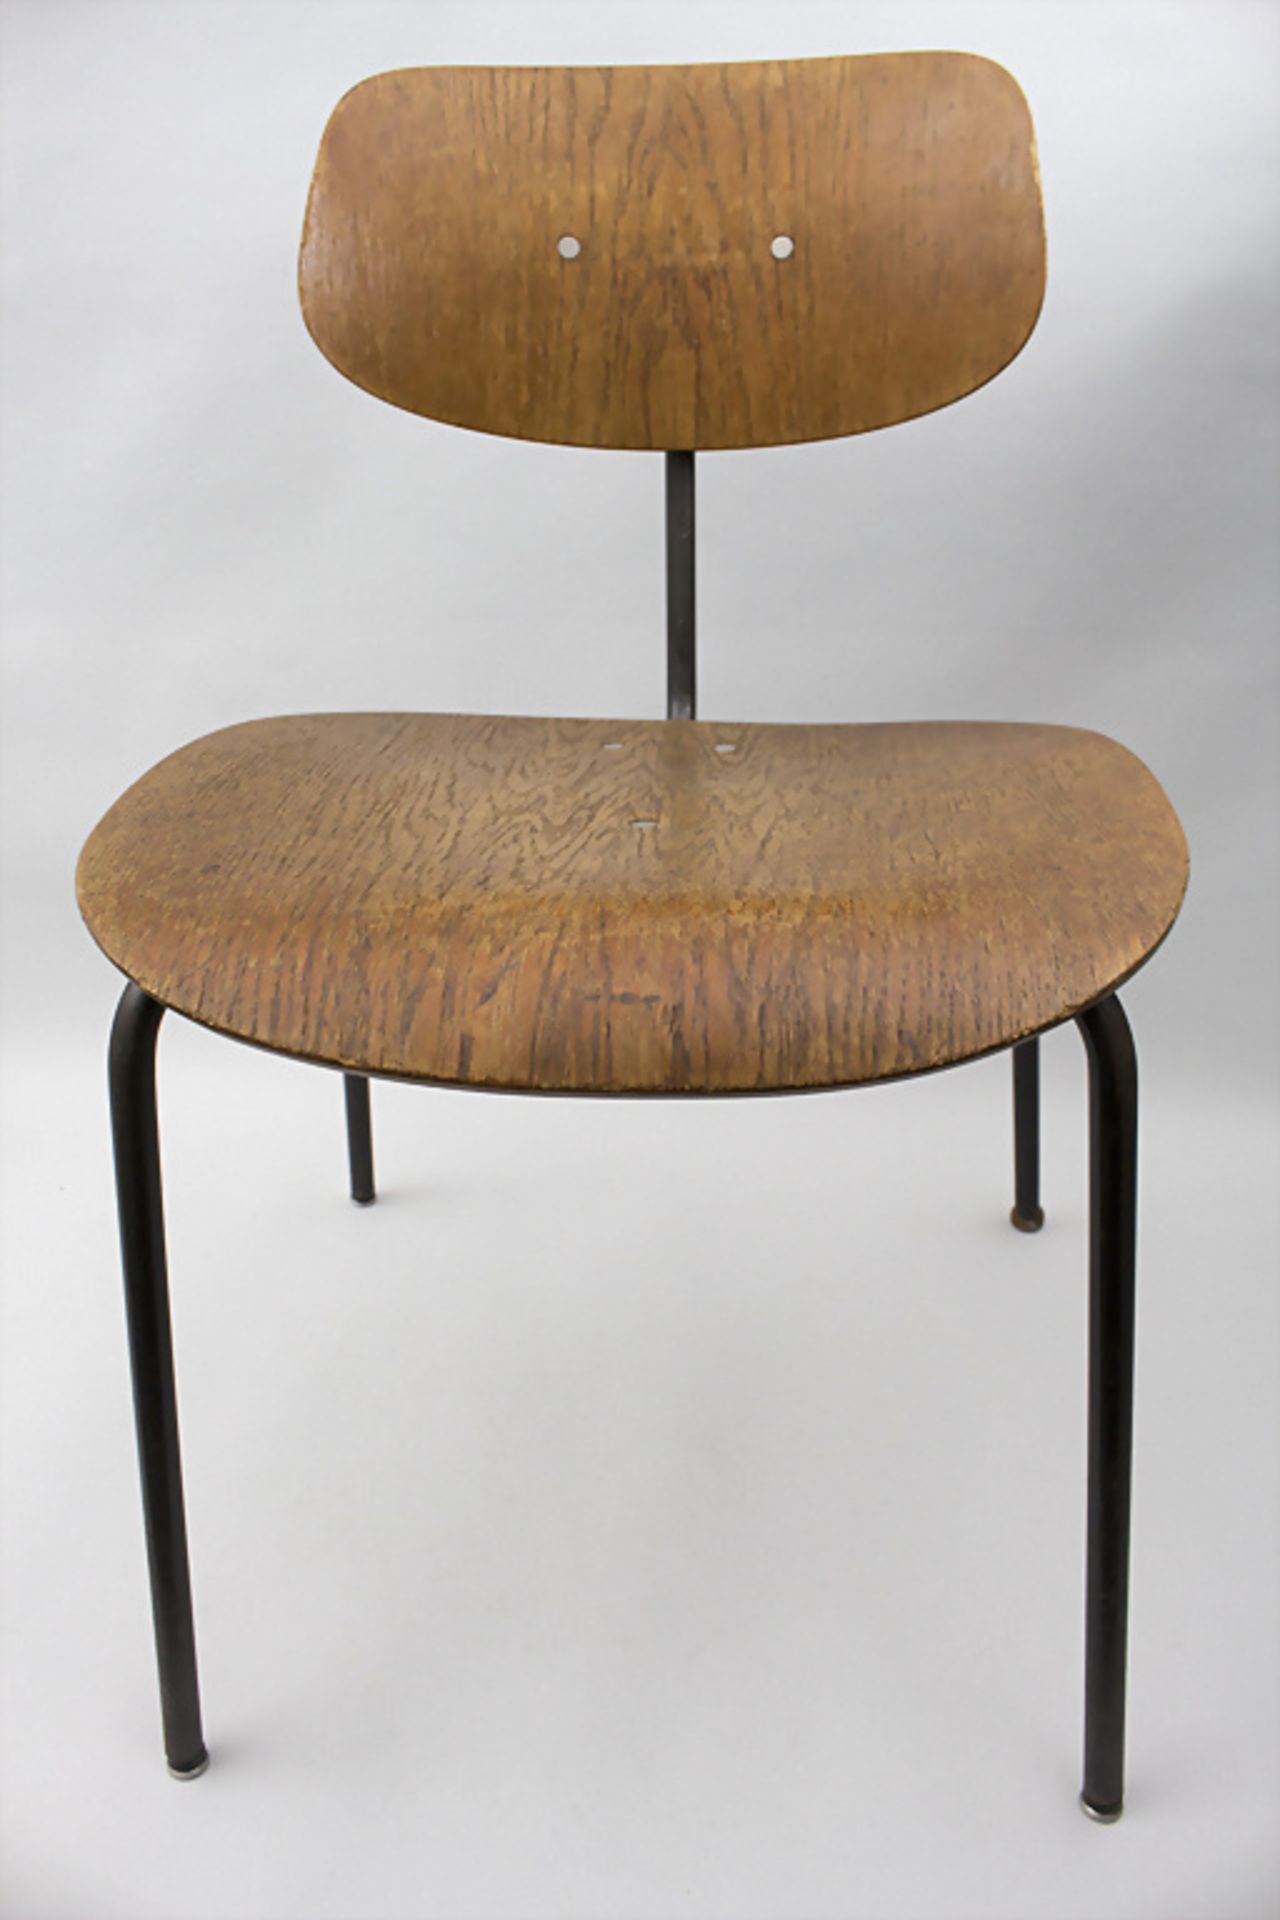 Stuhl / A chair, nach Entwurf Egon Eiermann, um 1950